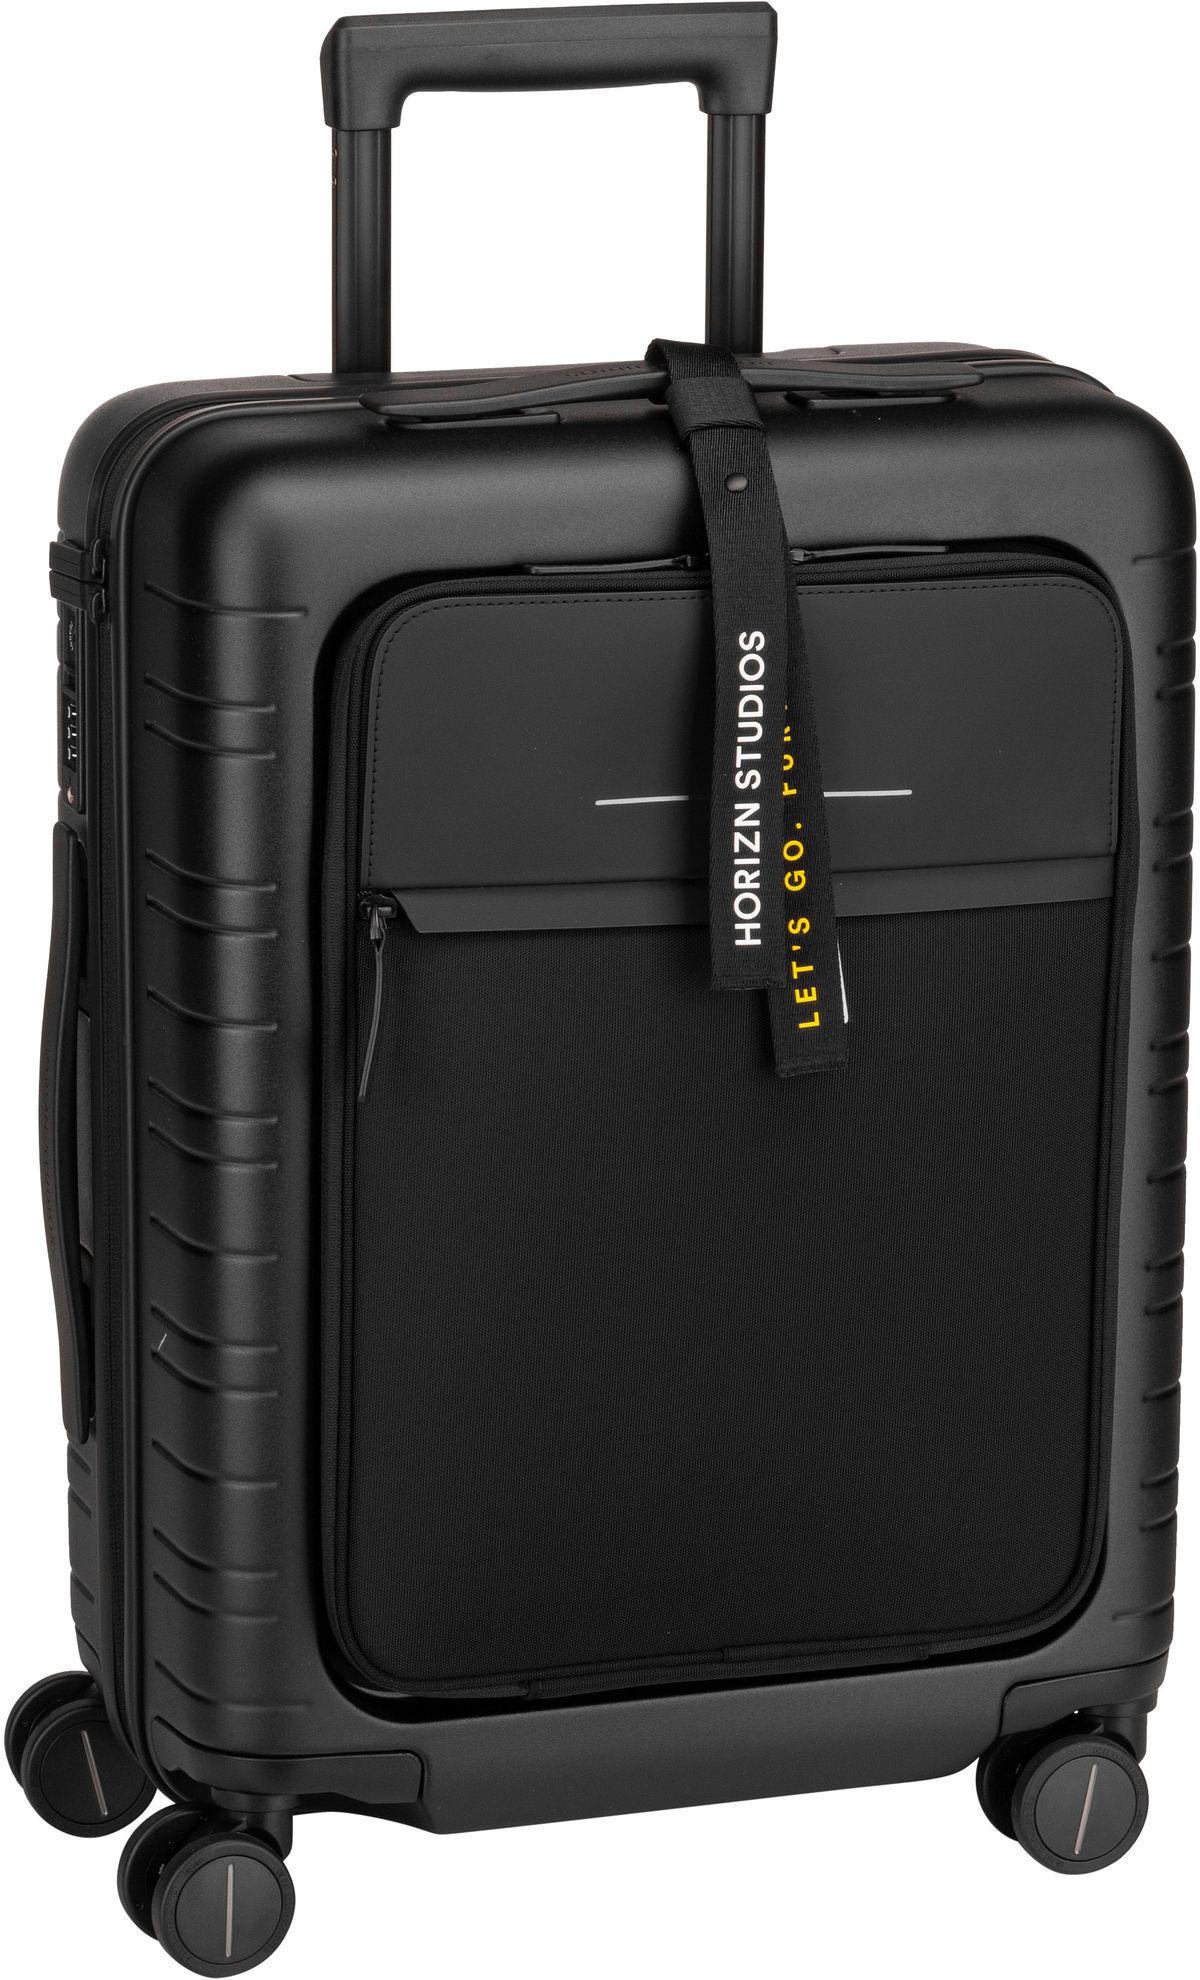 Horizn Studios M5 Essential Cabin Luggage - All Black